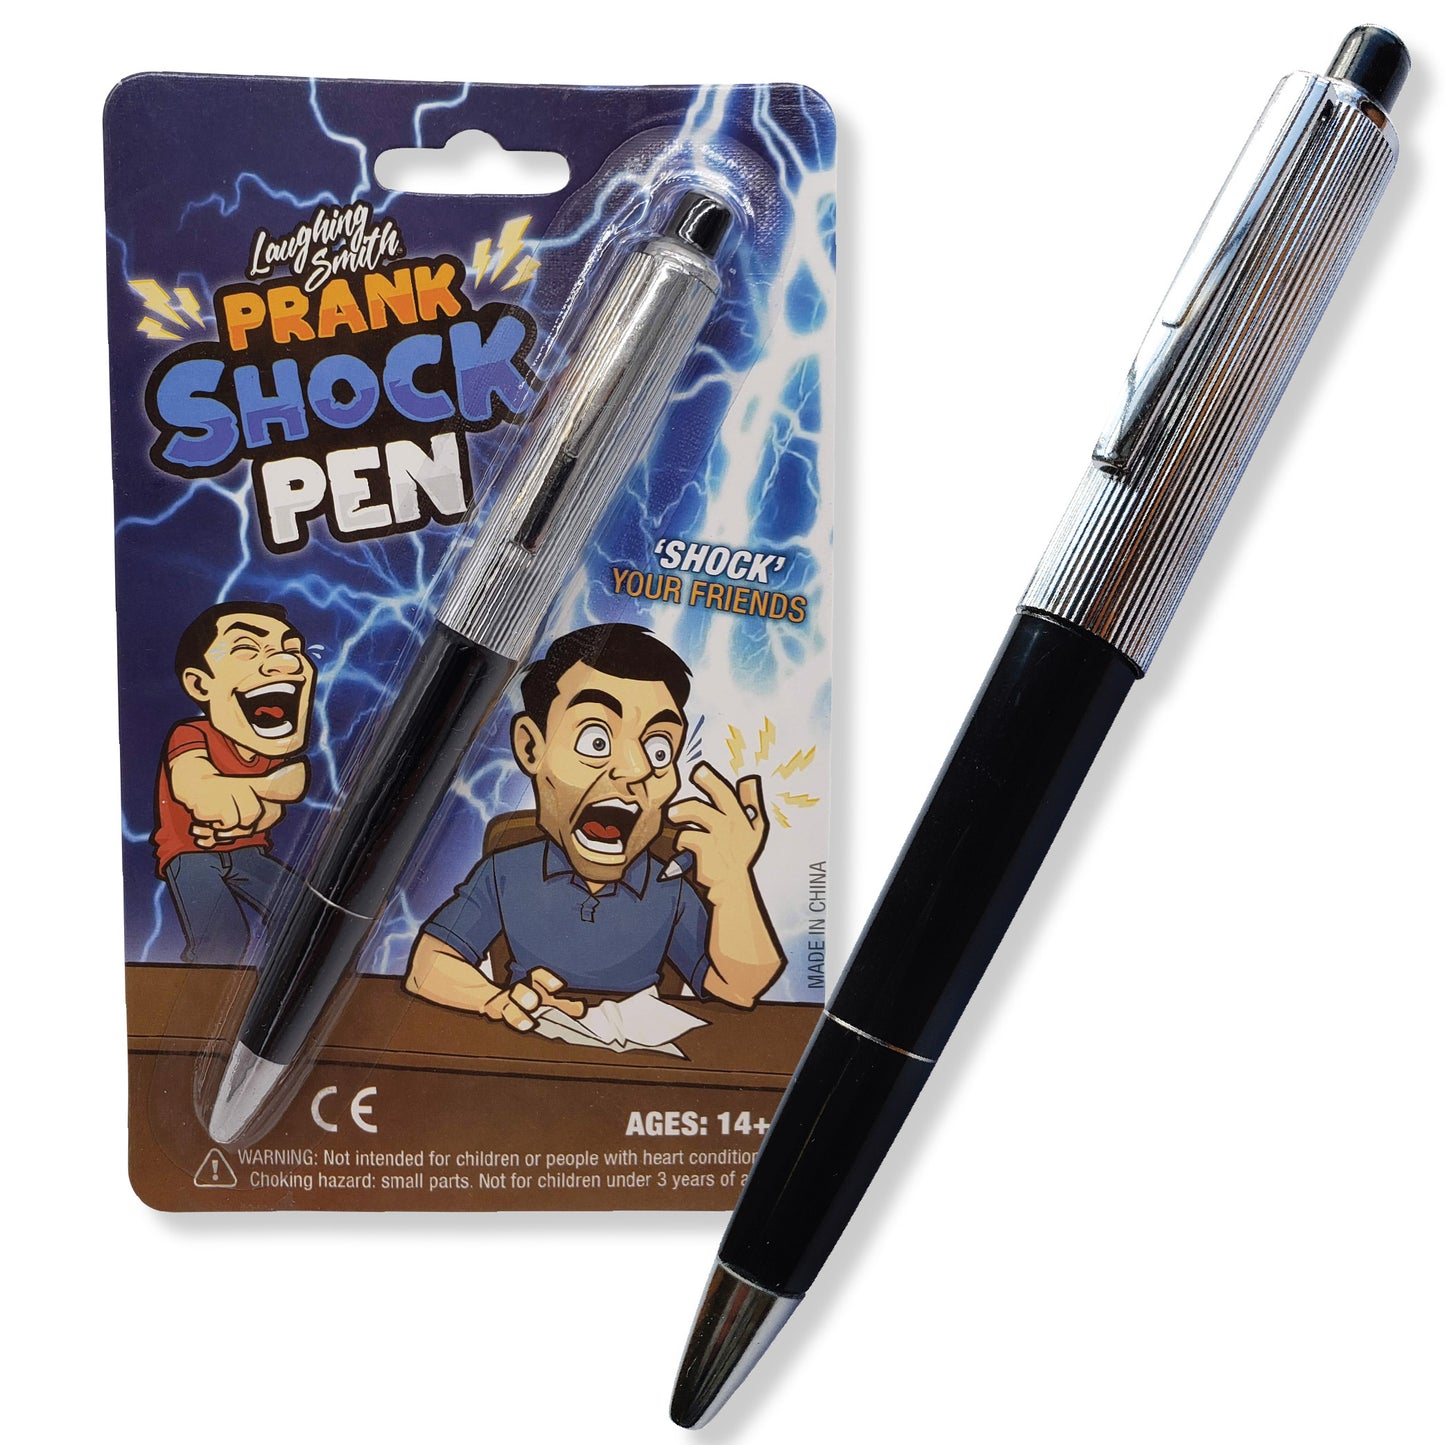 Shocking Electric Pen Prank Shock Trick Novelty Metal Joke Gag Toy Gift  Funny US